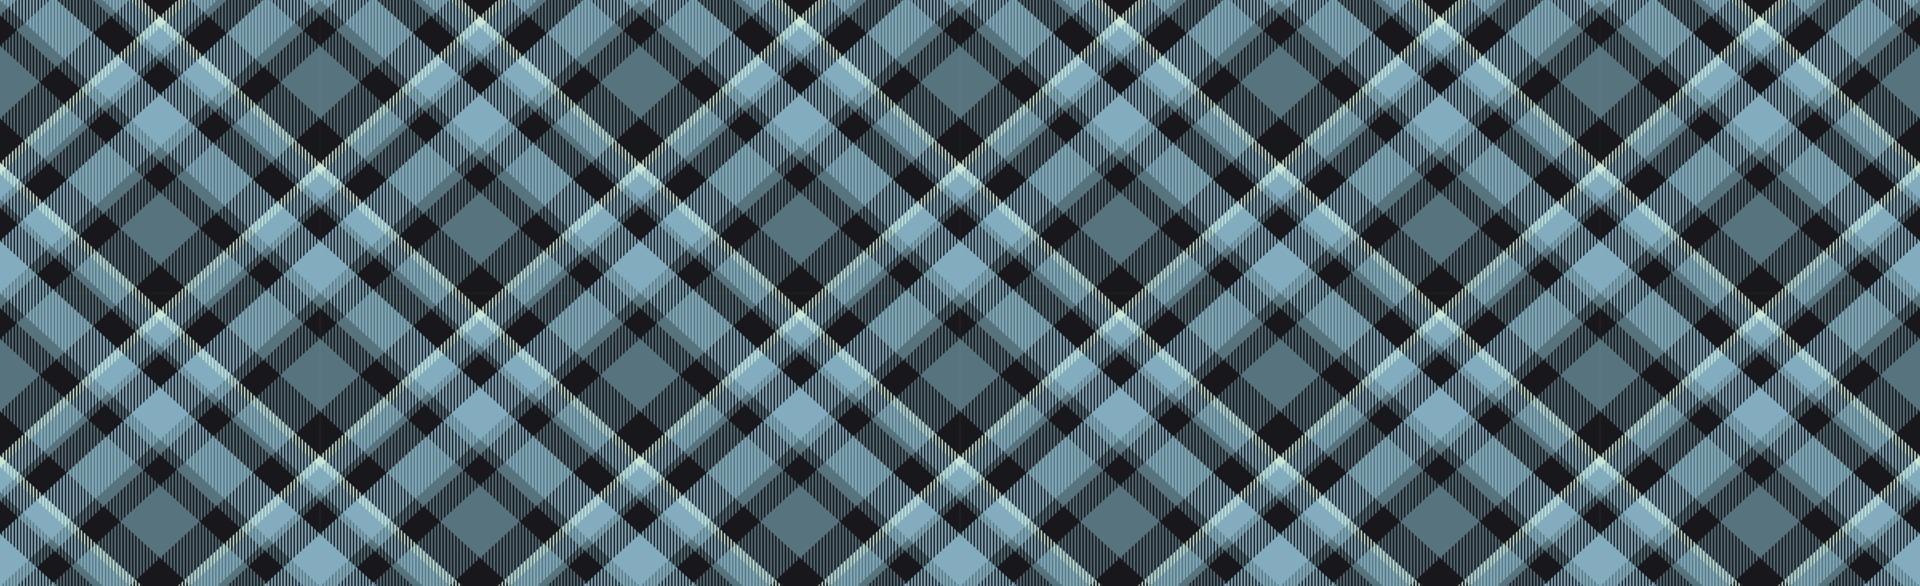 Seamless plaid tartan scotland texture with rhombuses - Vector